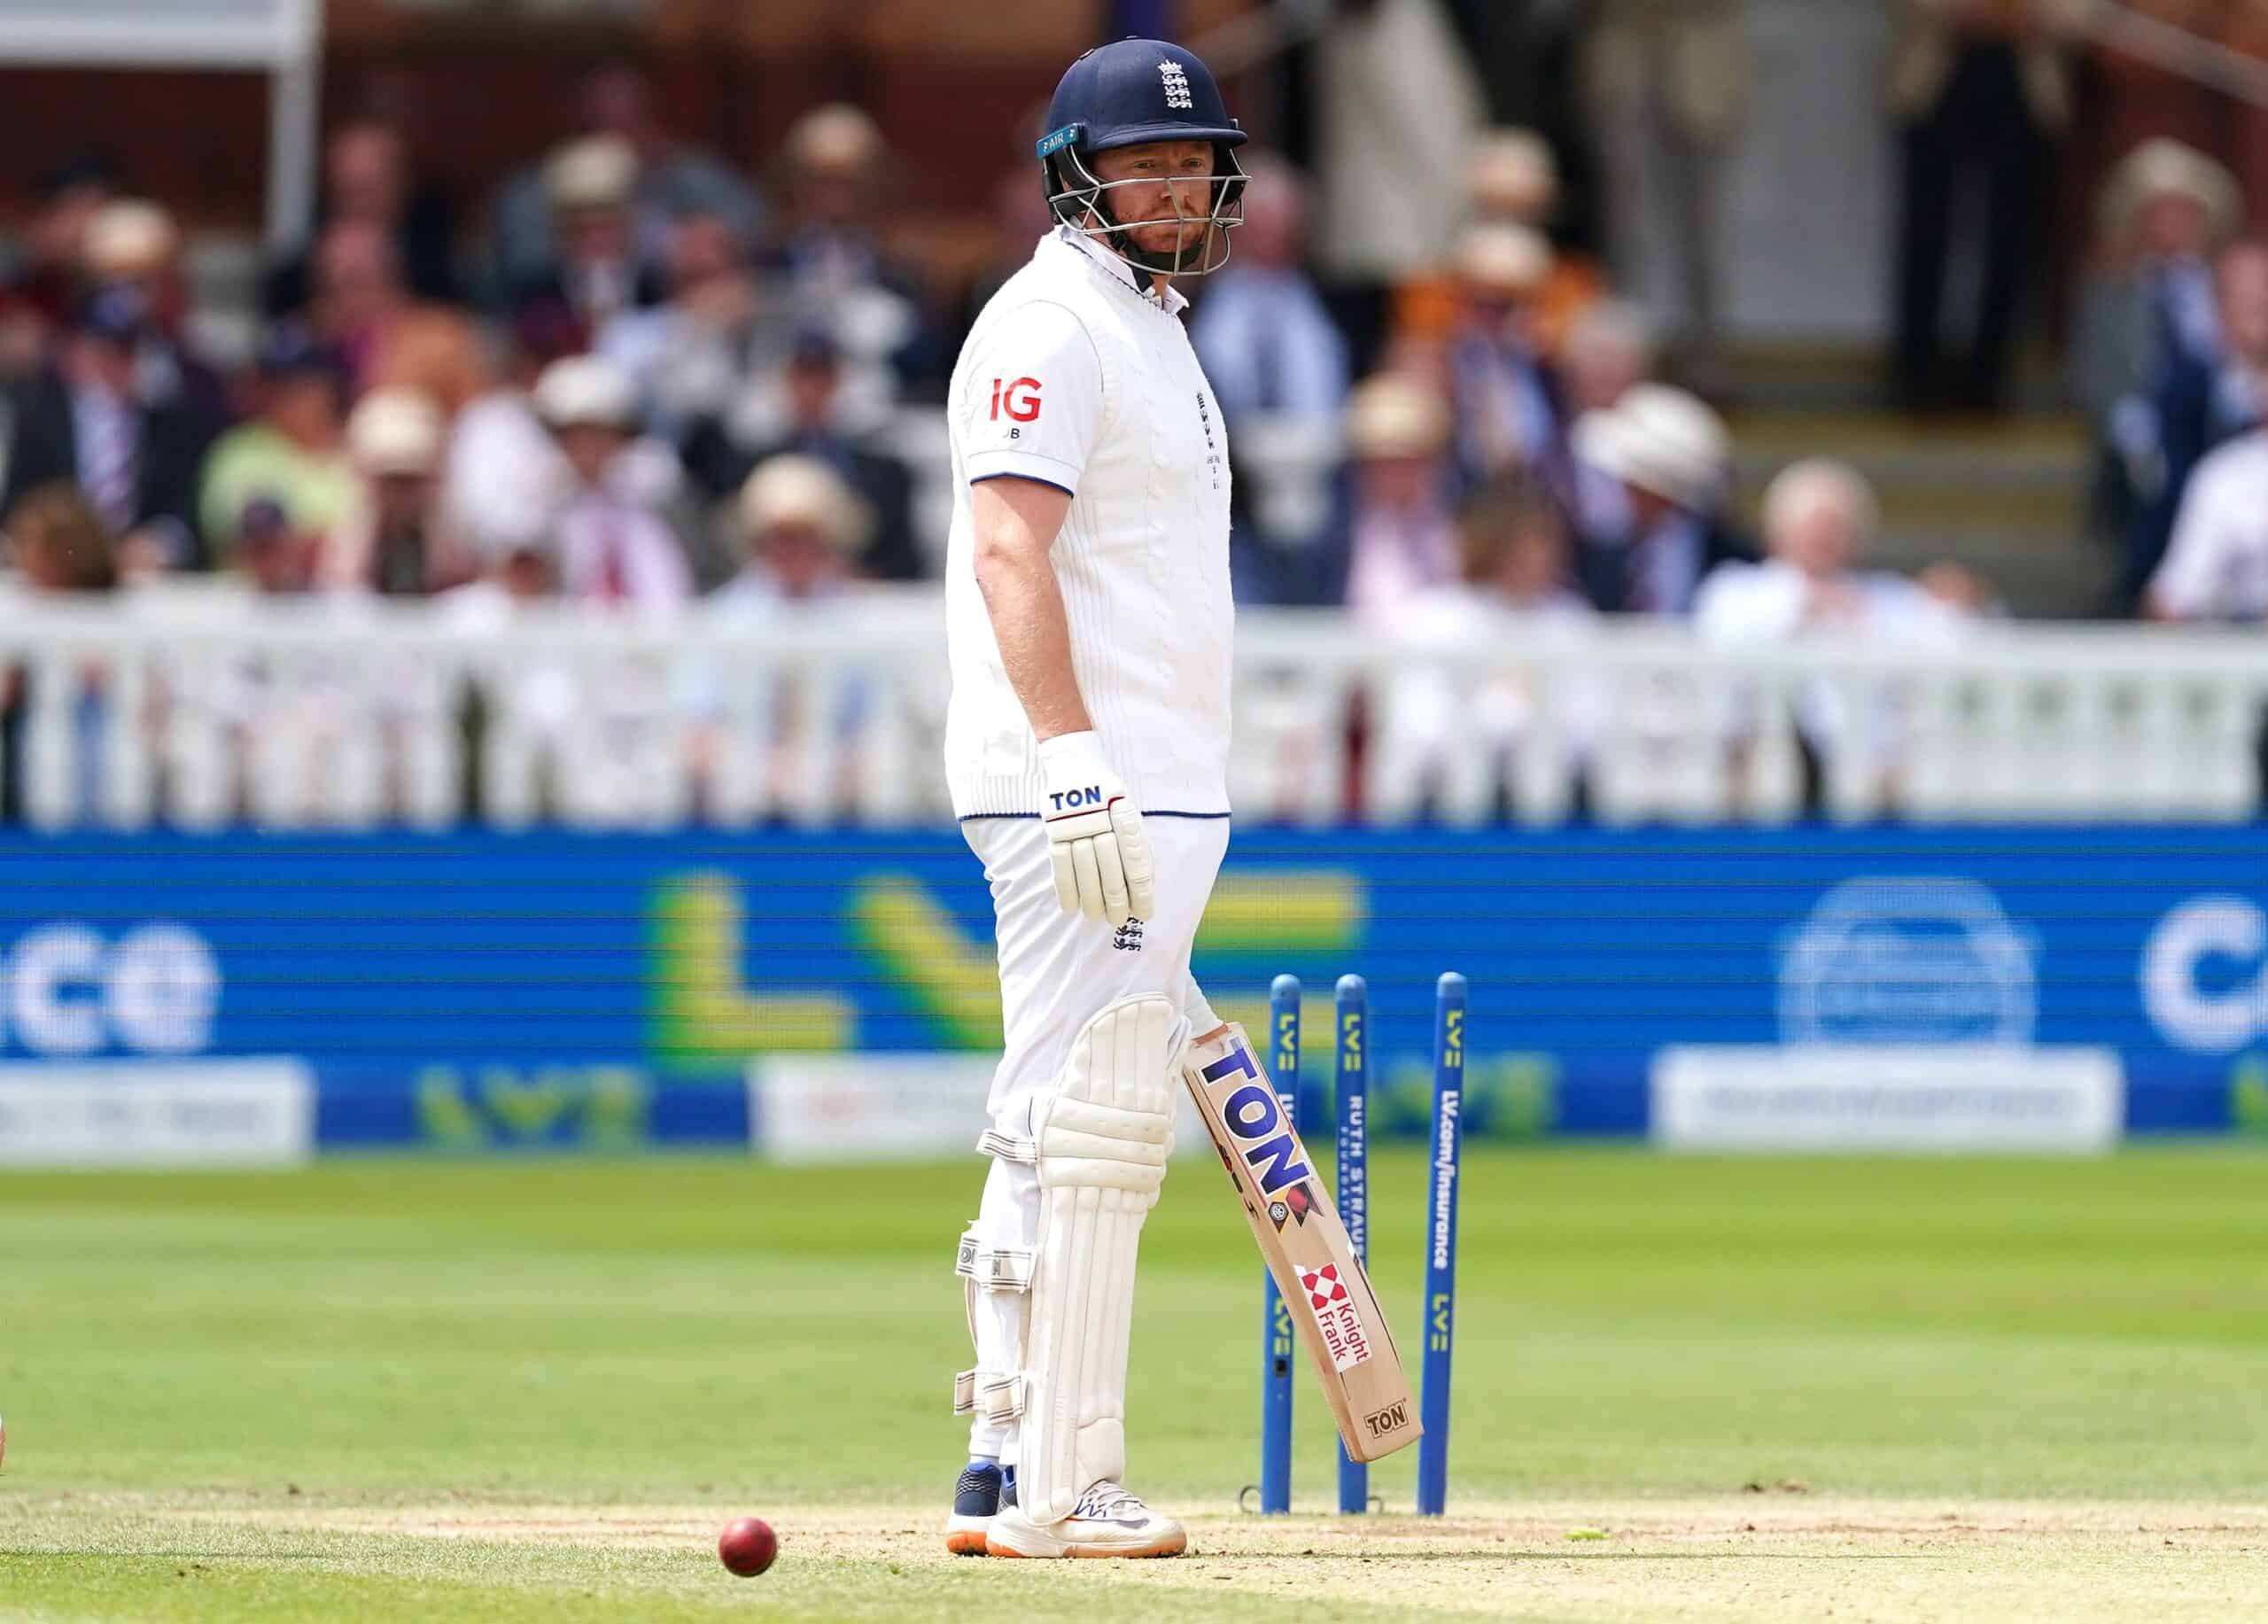 Spirit of Cricket debate looms over England’s latest defeat